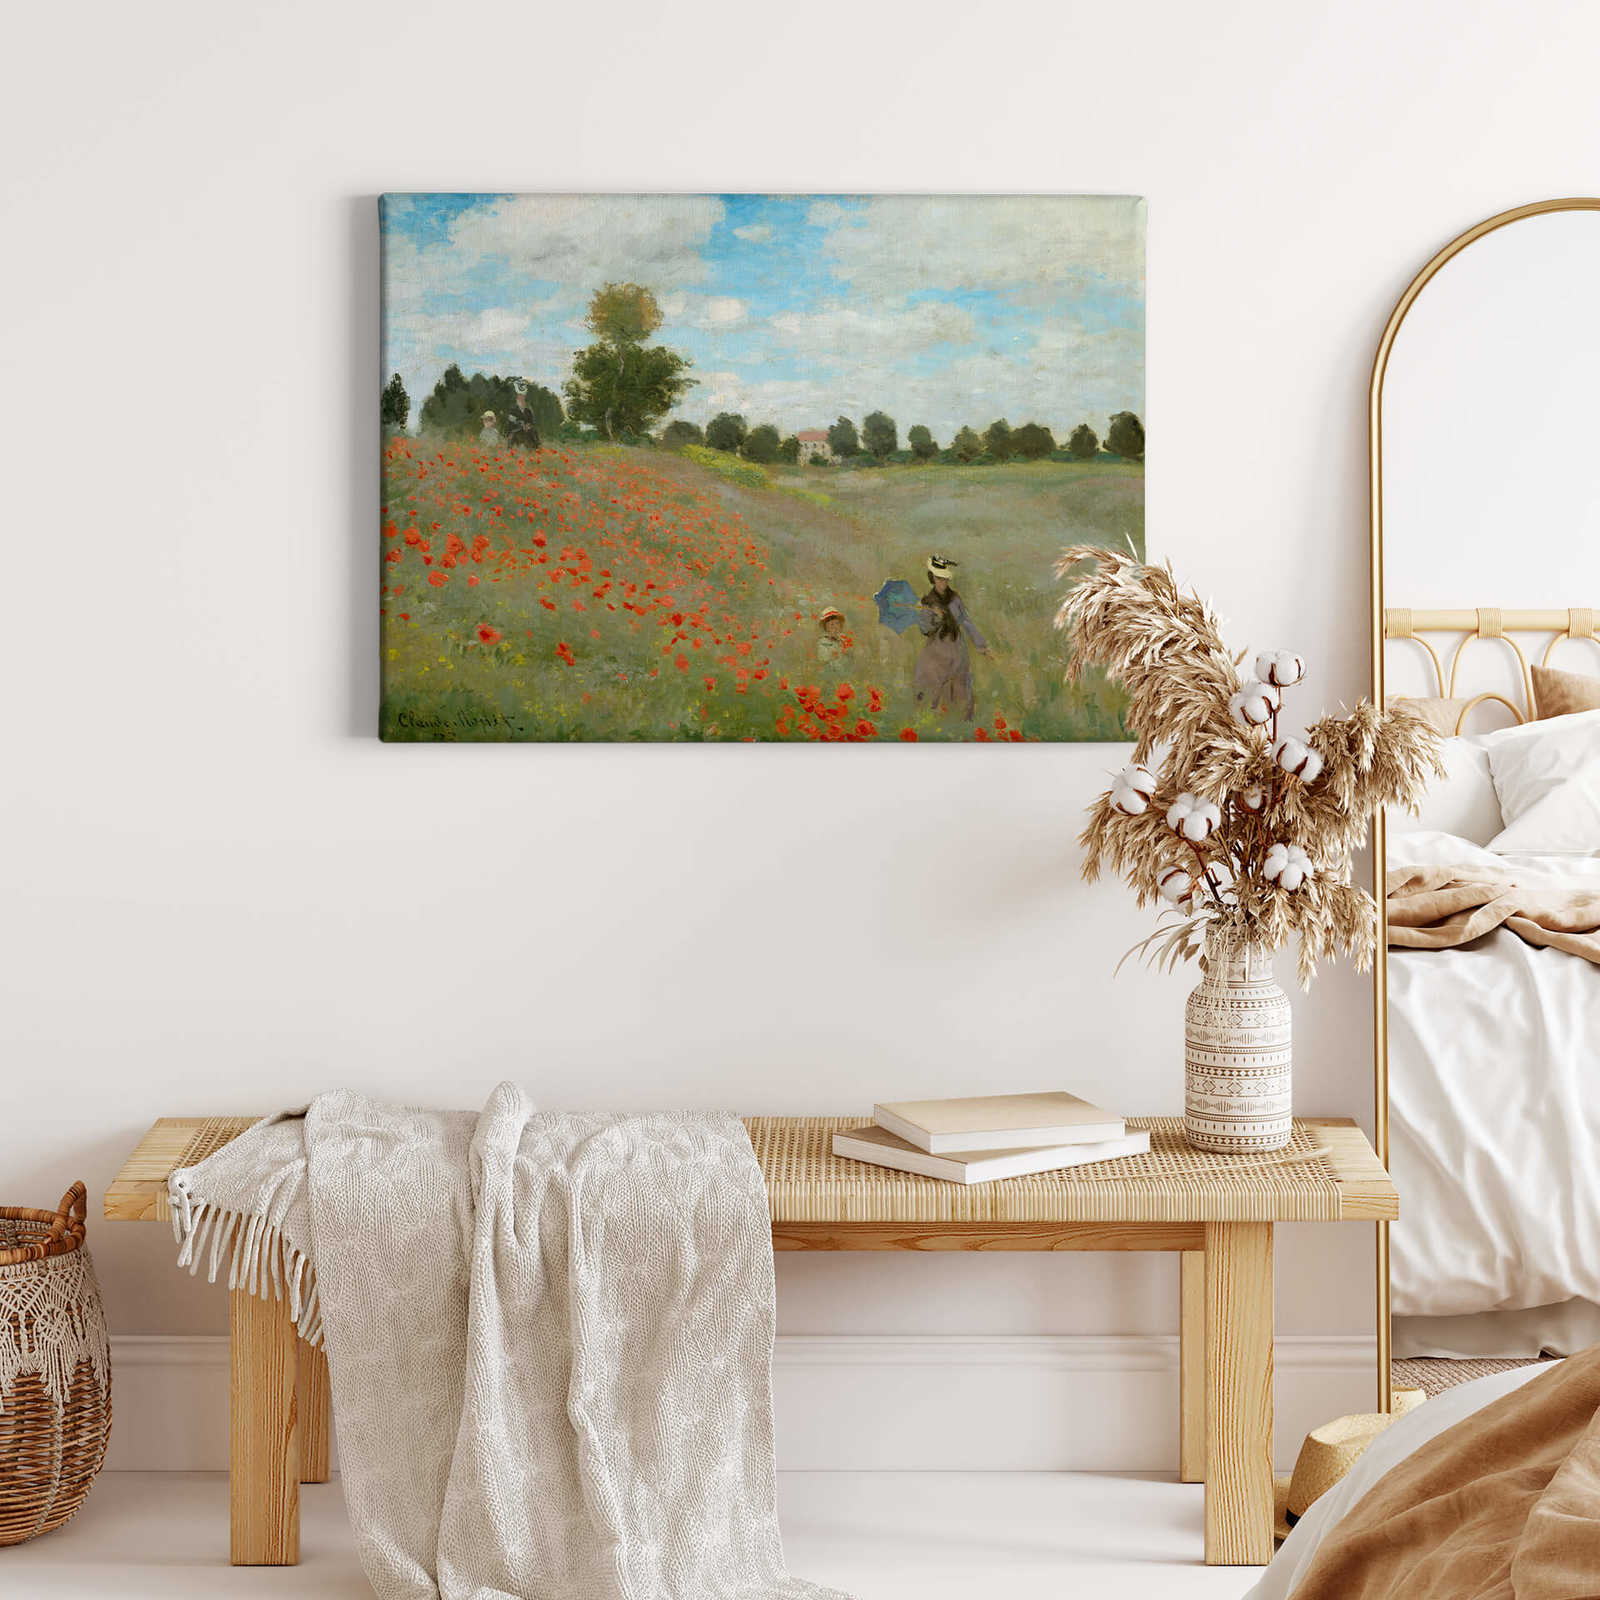             Monet canvas print "Poppy field near argenteuil"
        